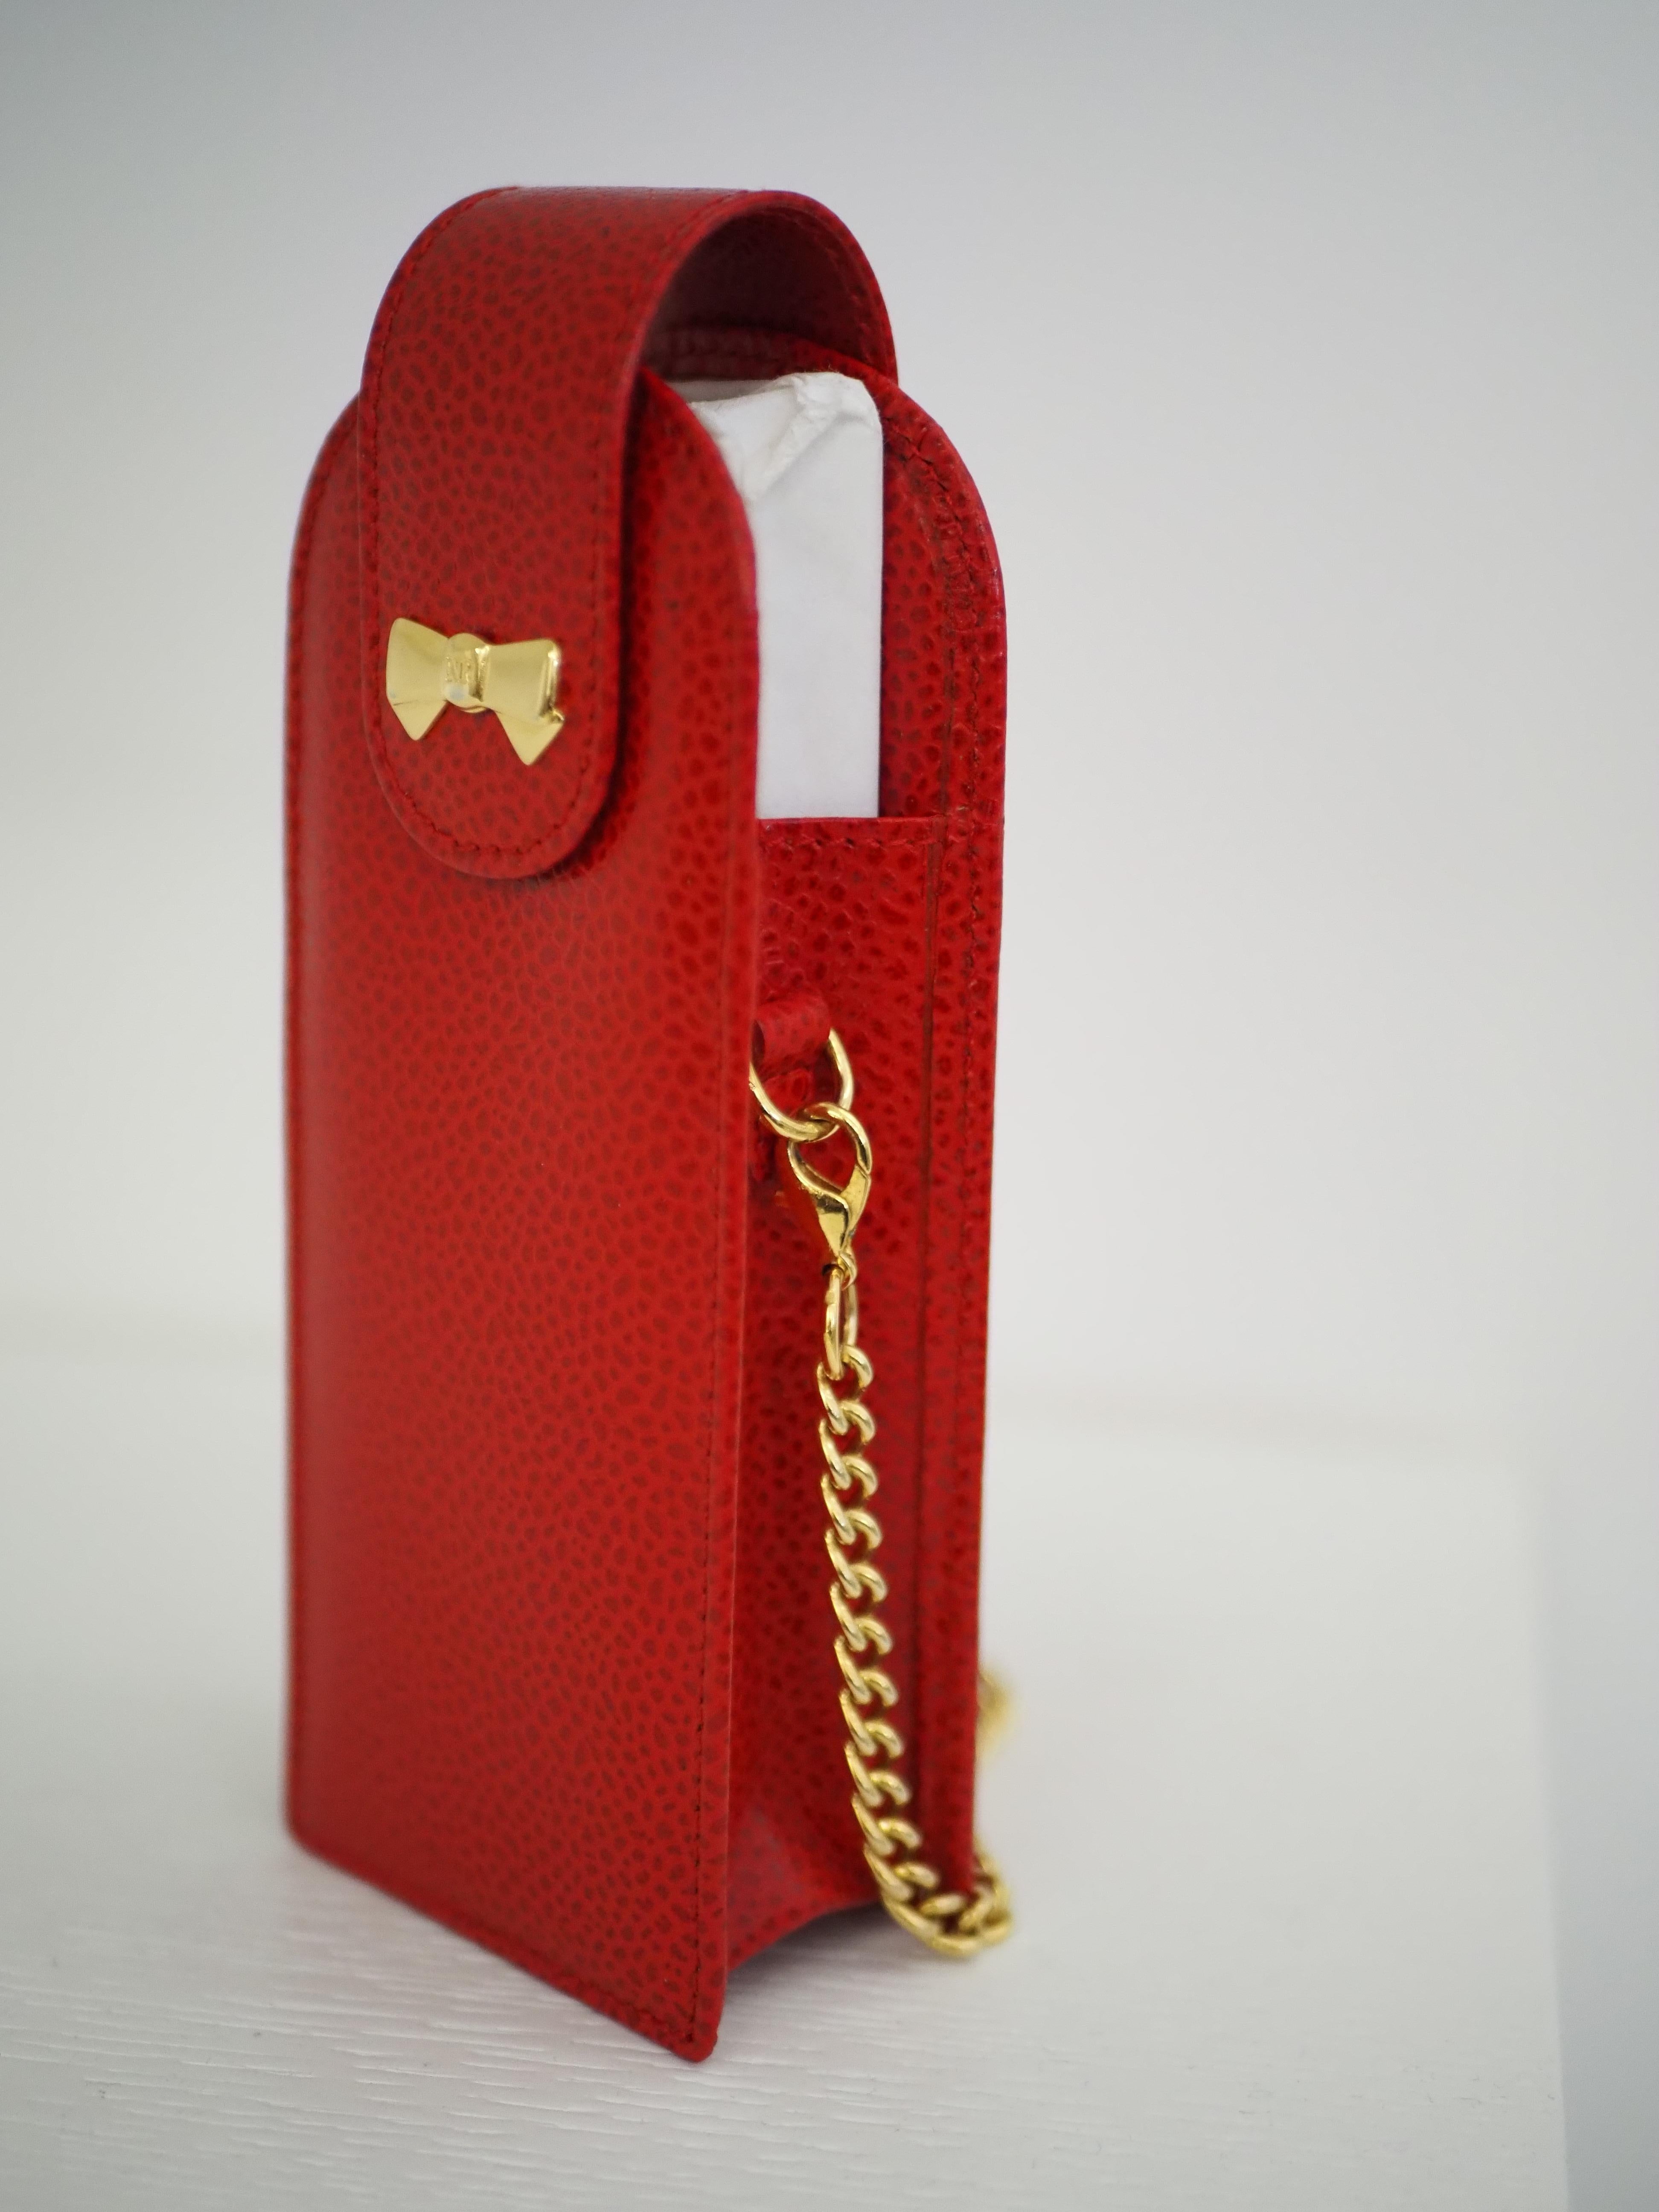 Nina Ricci red small shoulder bag handbag For Sale 3